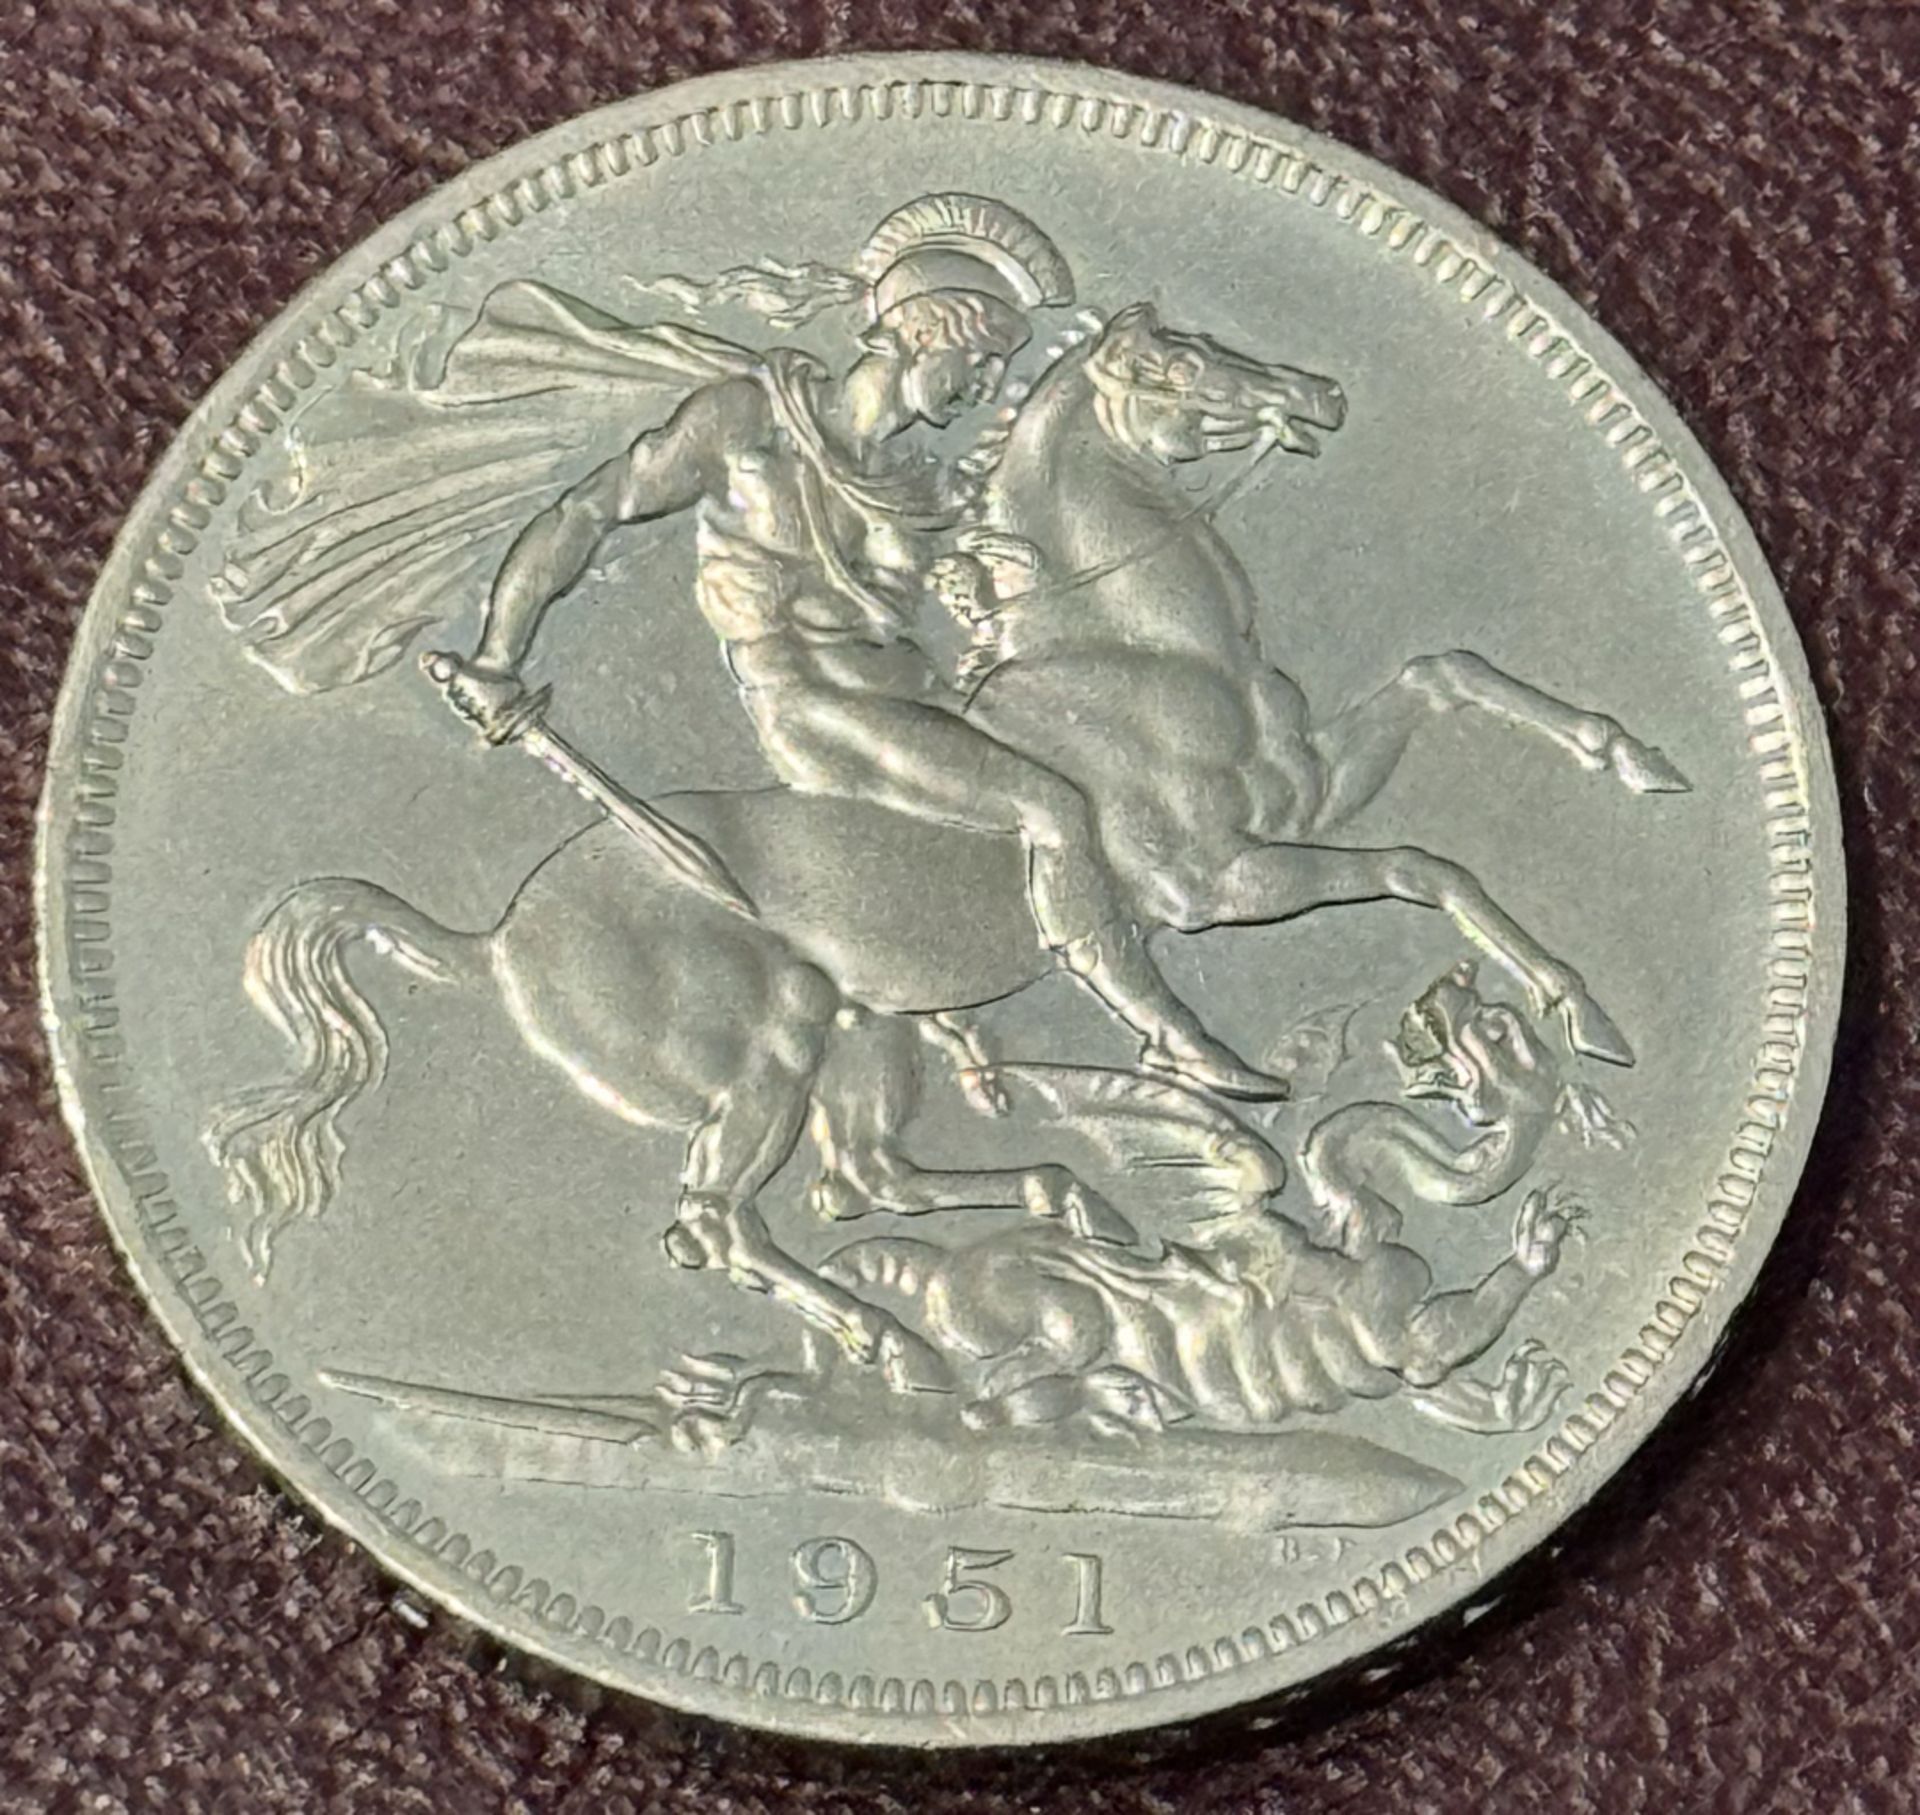 Five Shilling Coin 1951 - Great Britain Crown, George VI with Dragon - Festival of Britain